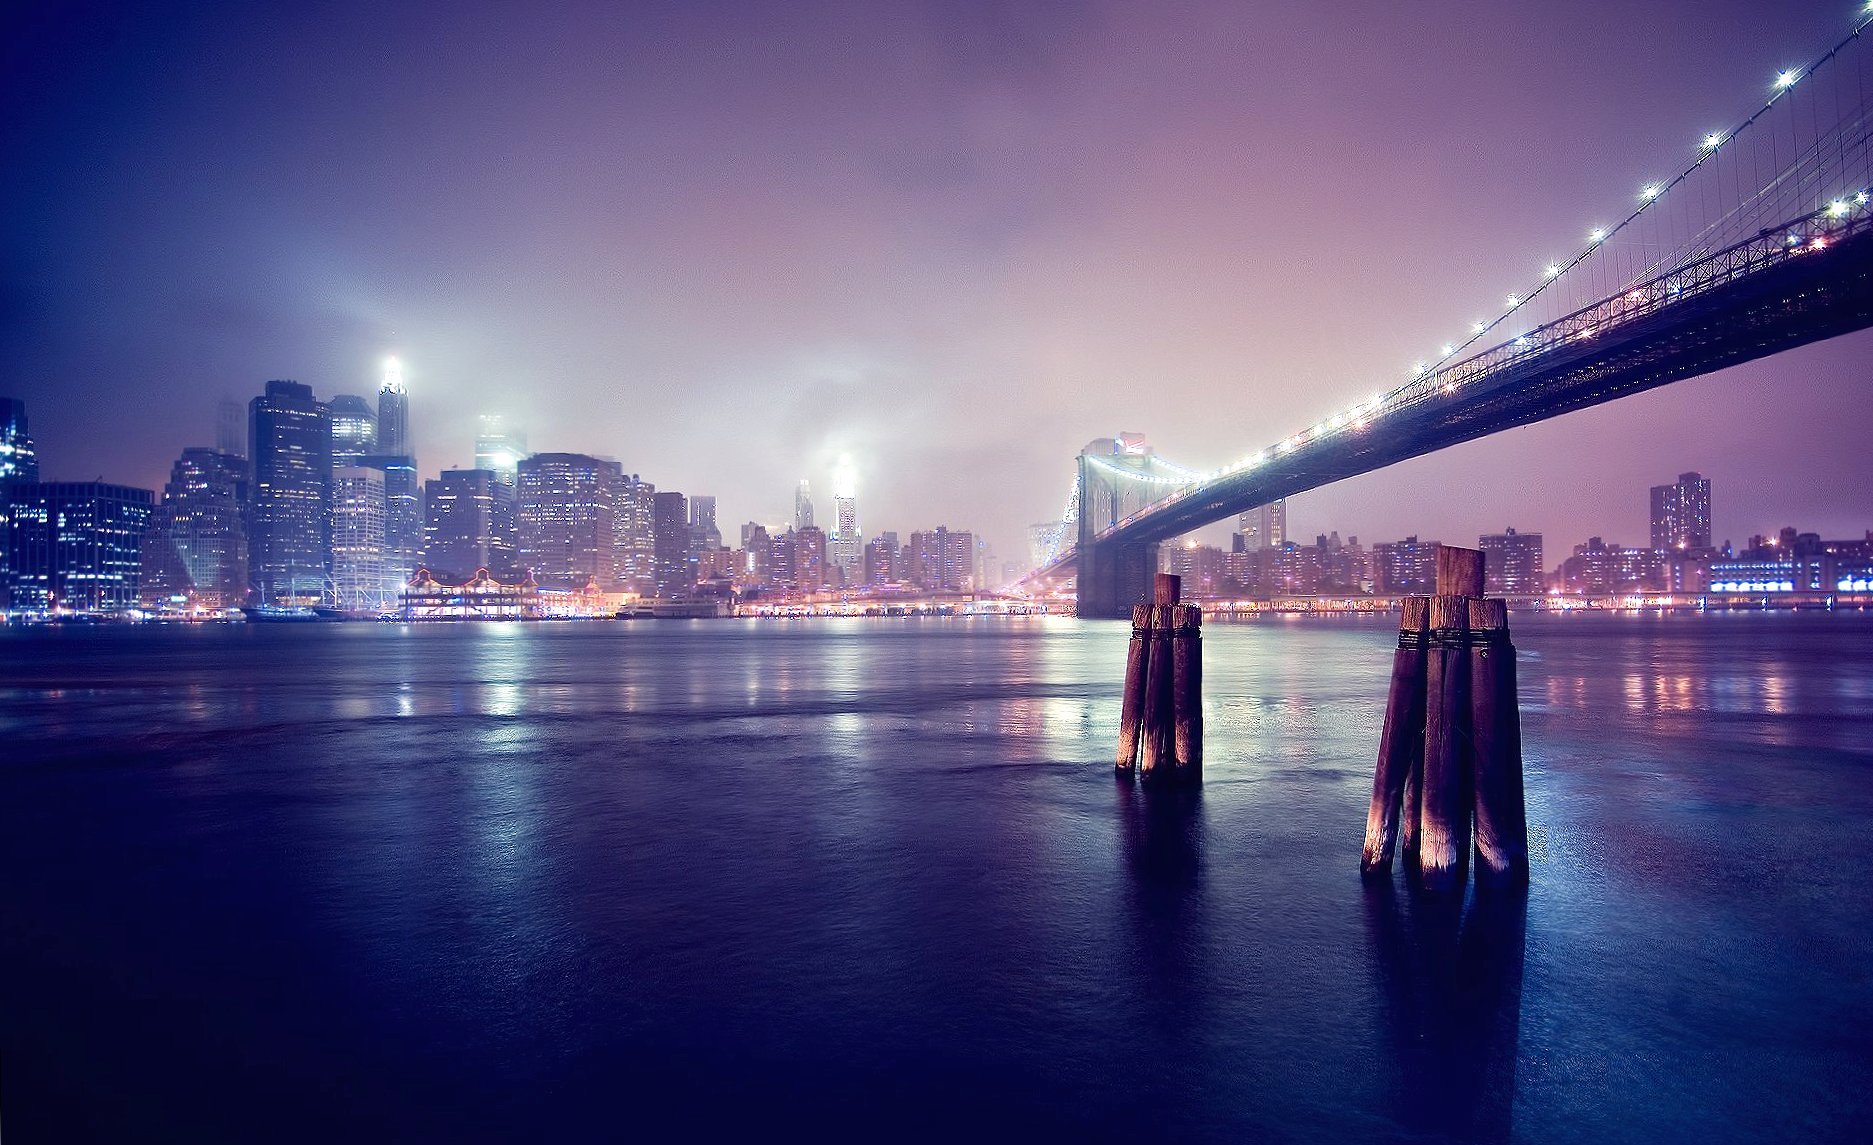 Night brooklyn bridge new york at 320 x 480 iPhone size wallpapers HD quality